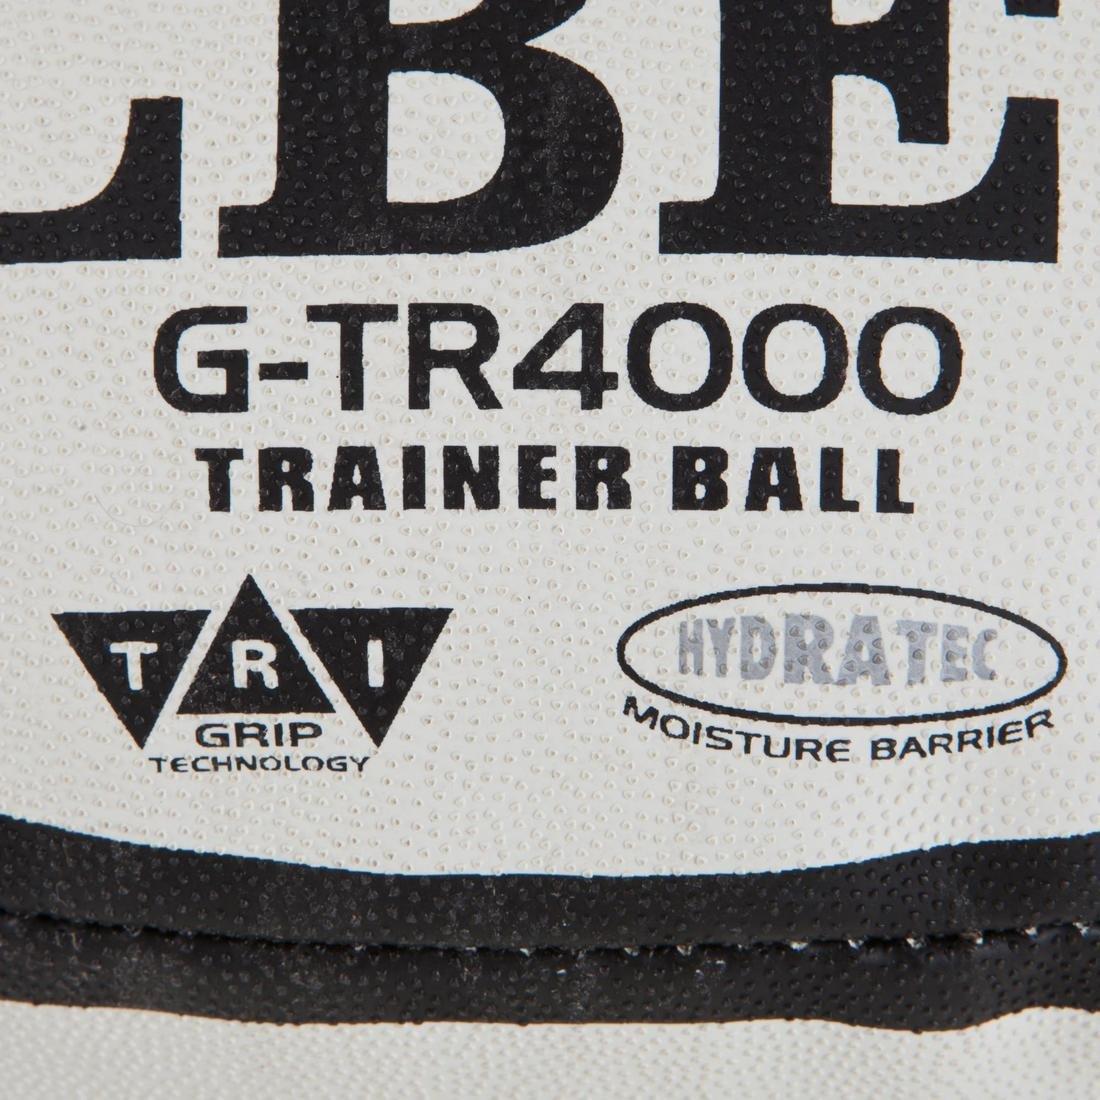 GILBERT - GTR 4000 Rugby Ball, White